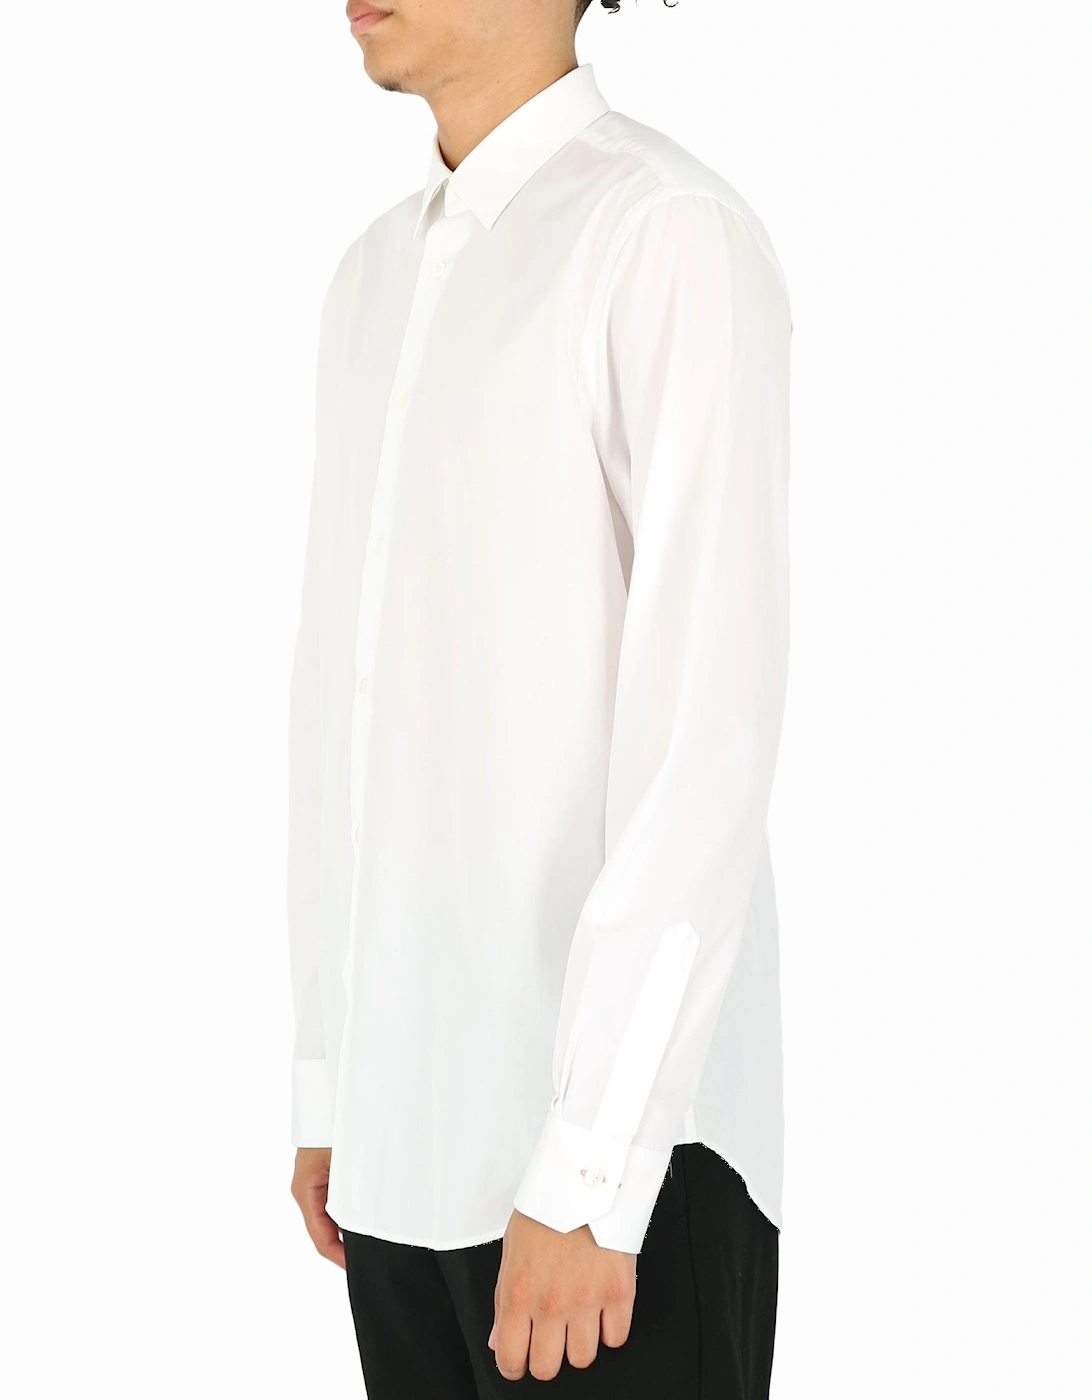 Internal Stripe Cuff White Shirt